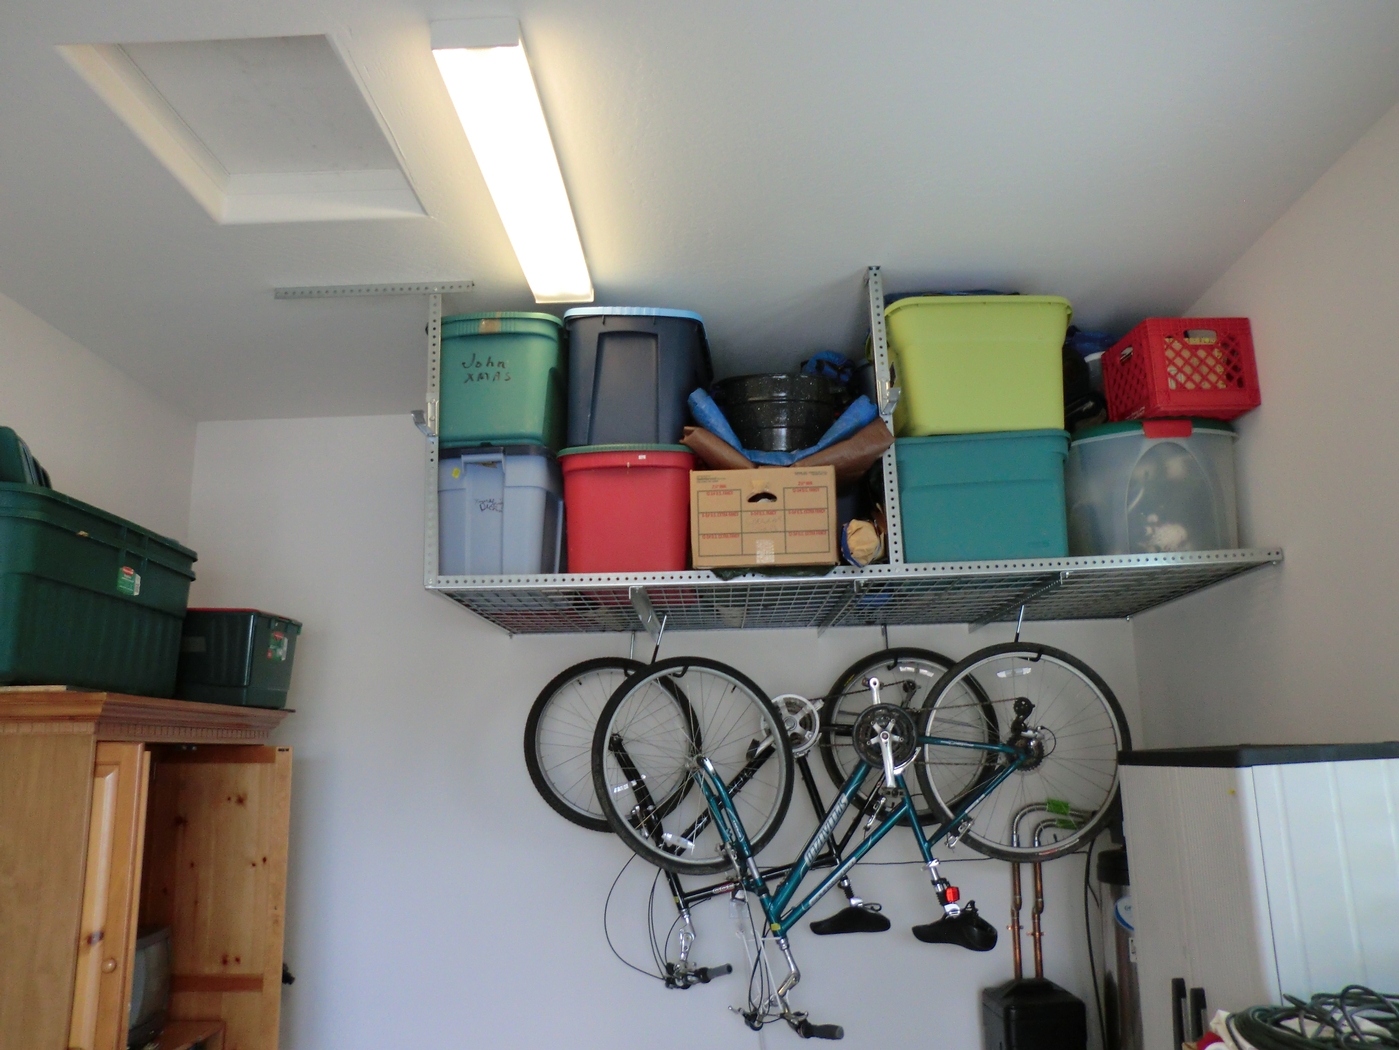 Overhead storage racks with bike hangers